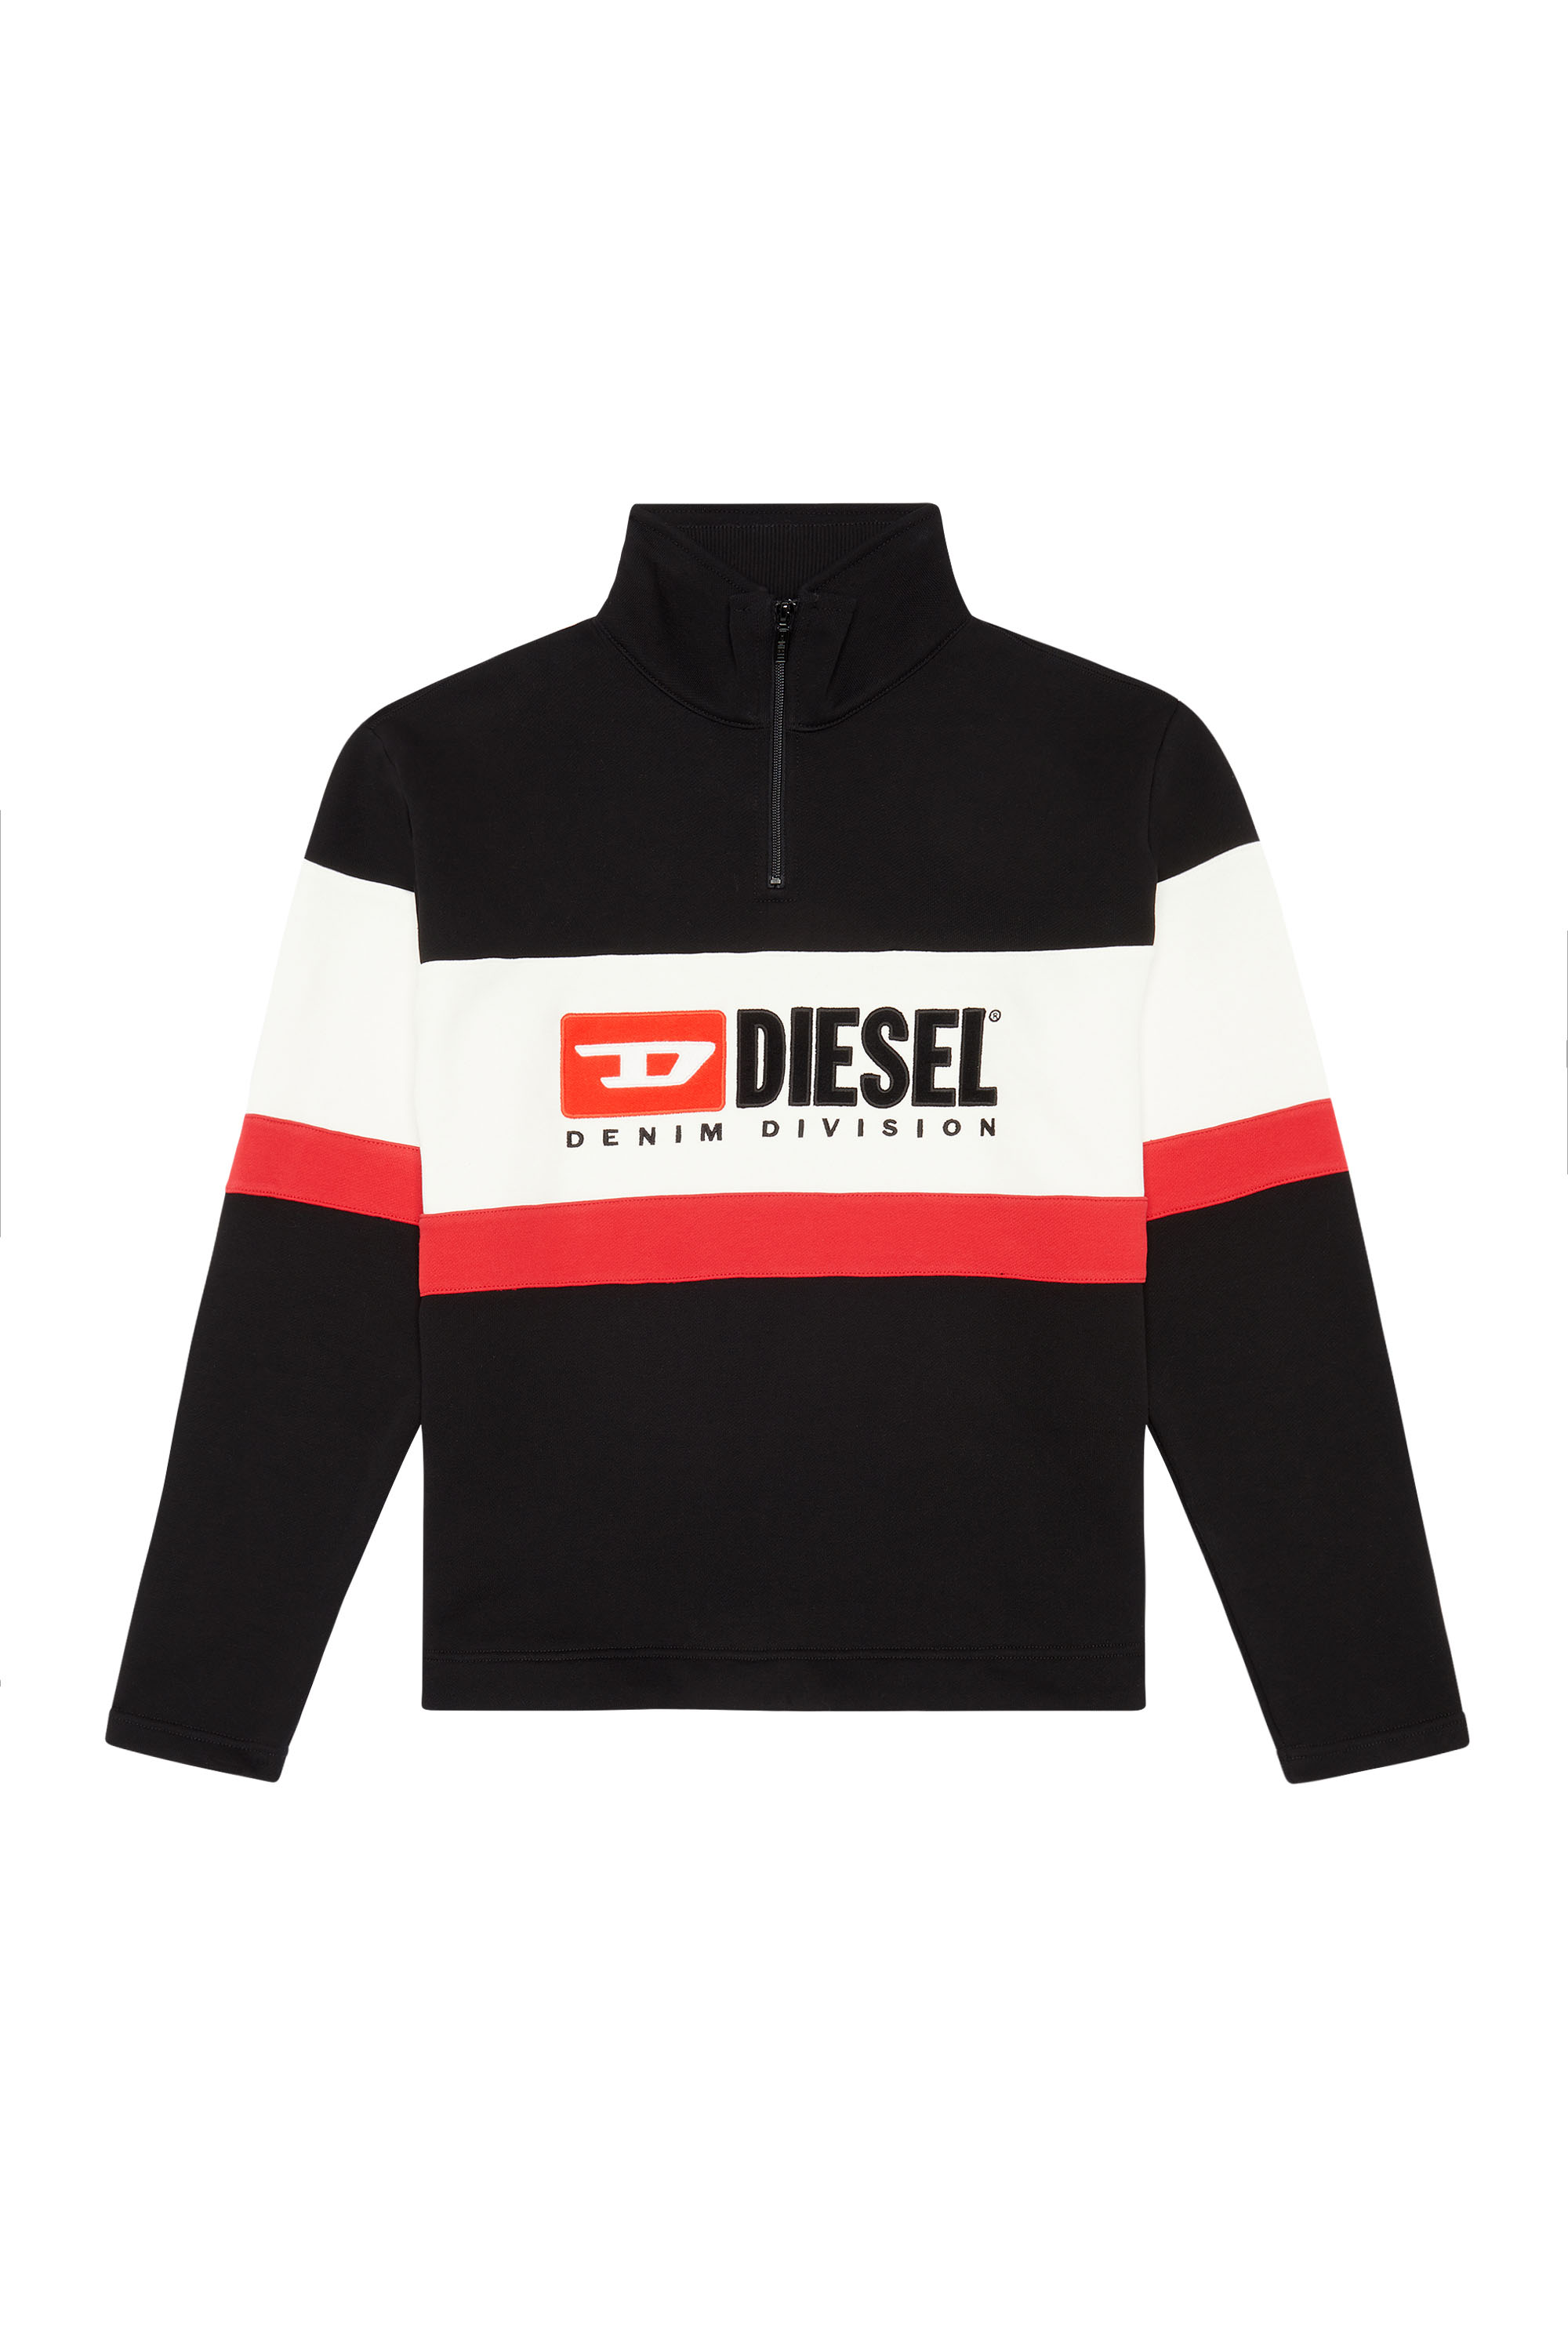 Diesel - S-SAINT-DIVISION, Black - Image 1